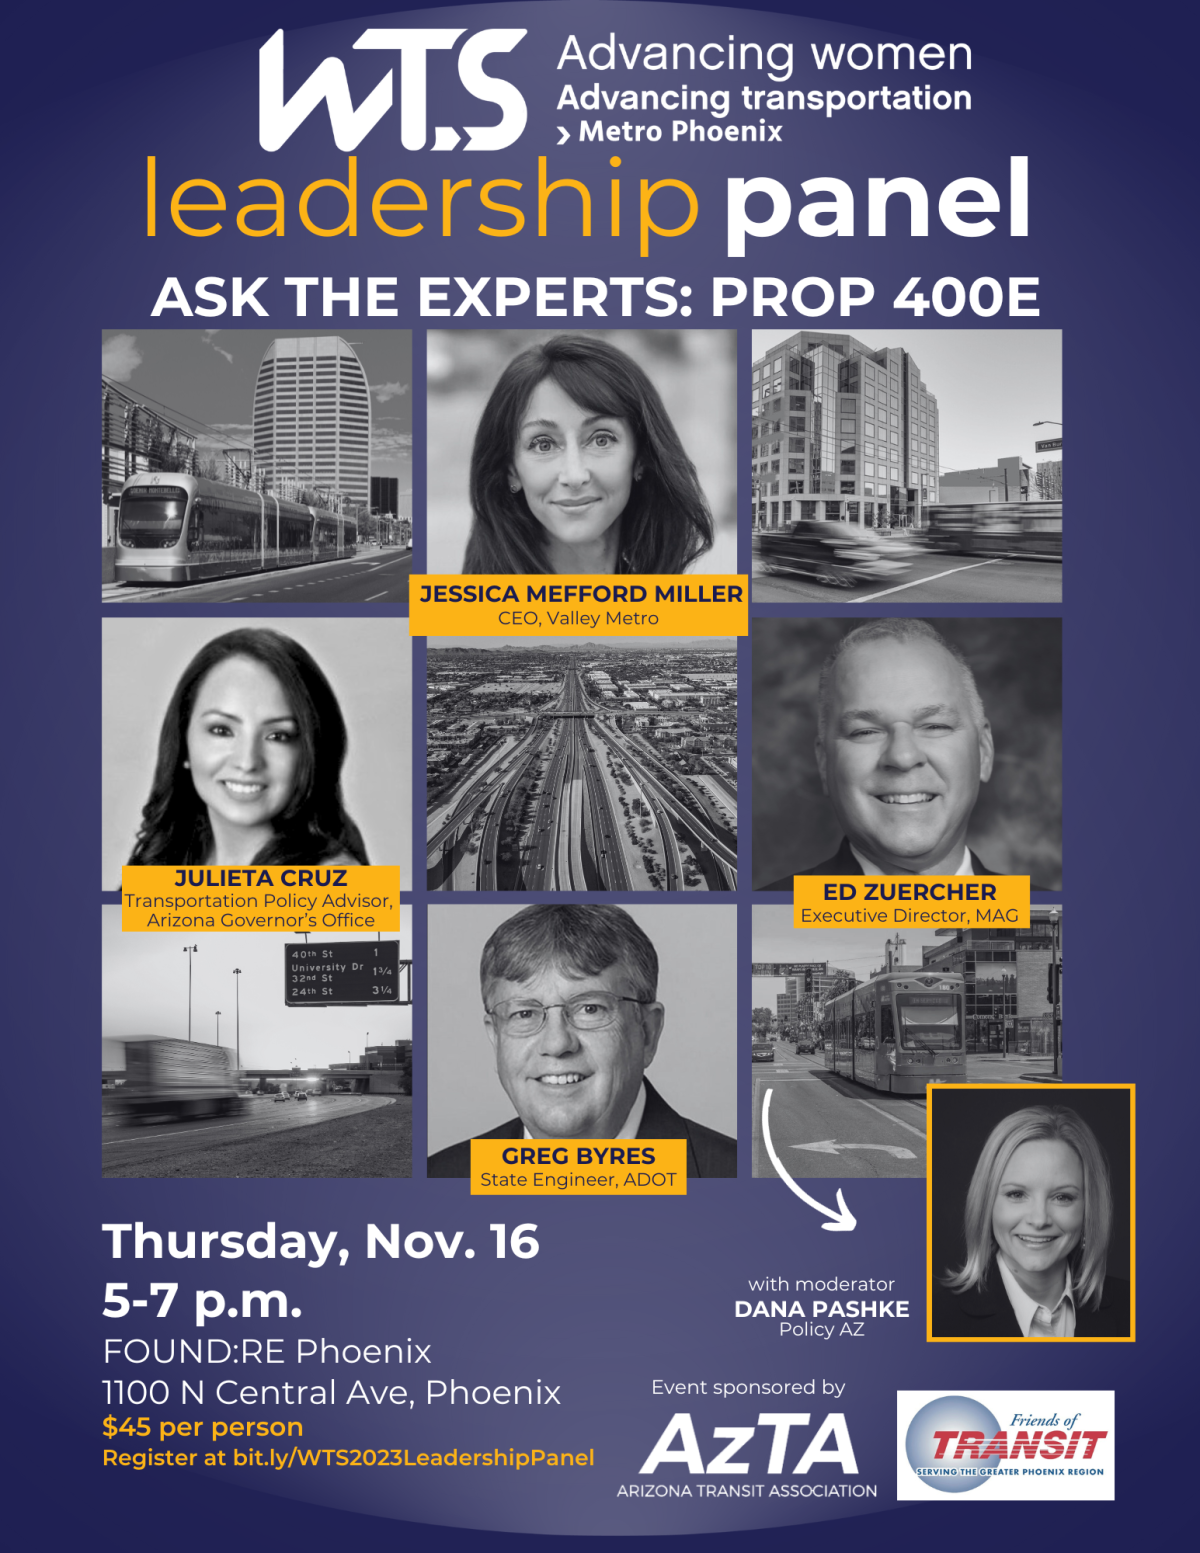 WTS Metro Phoenix Leadership Panel on Nov 16